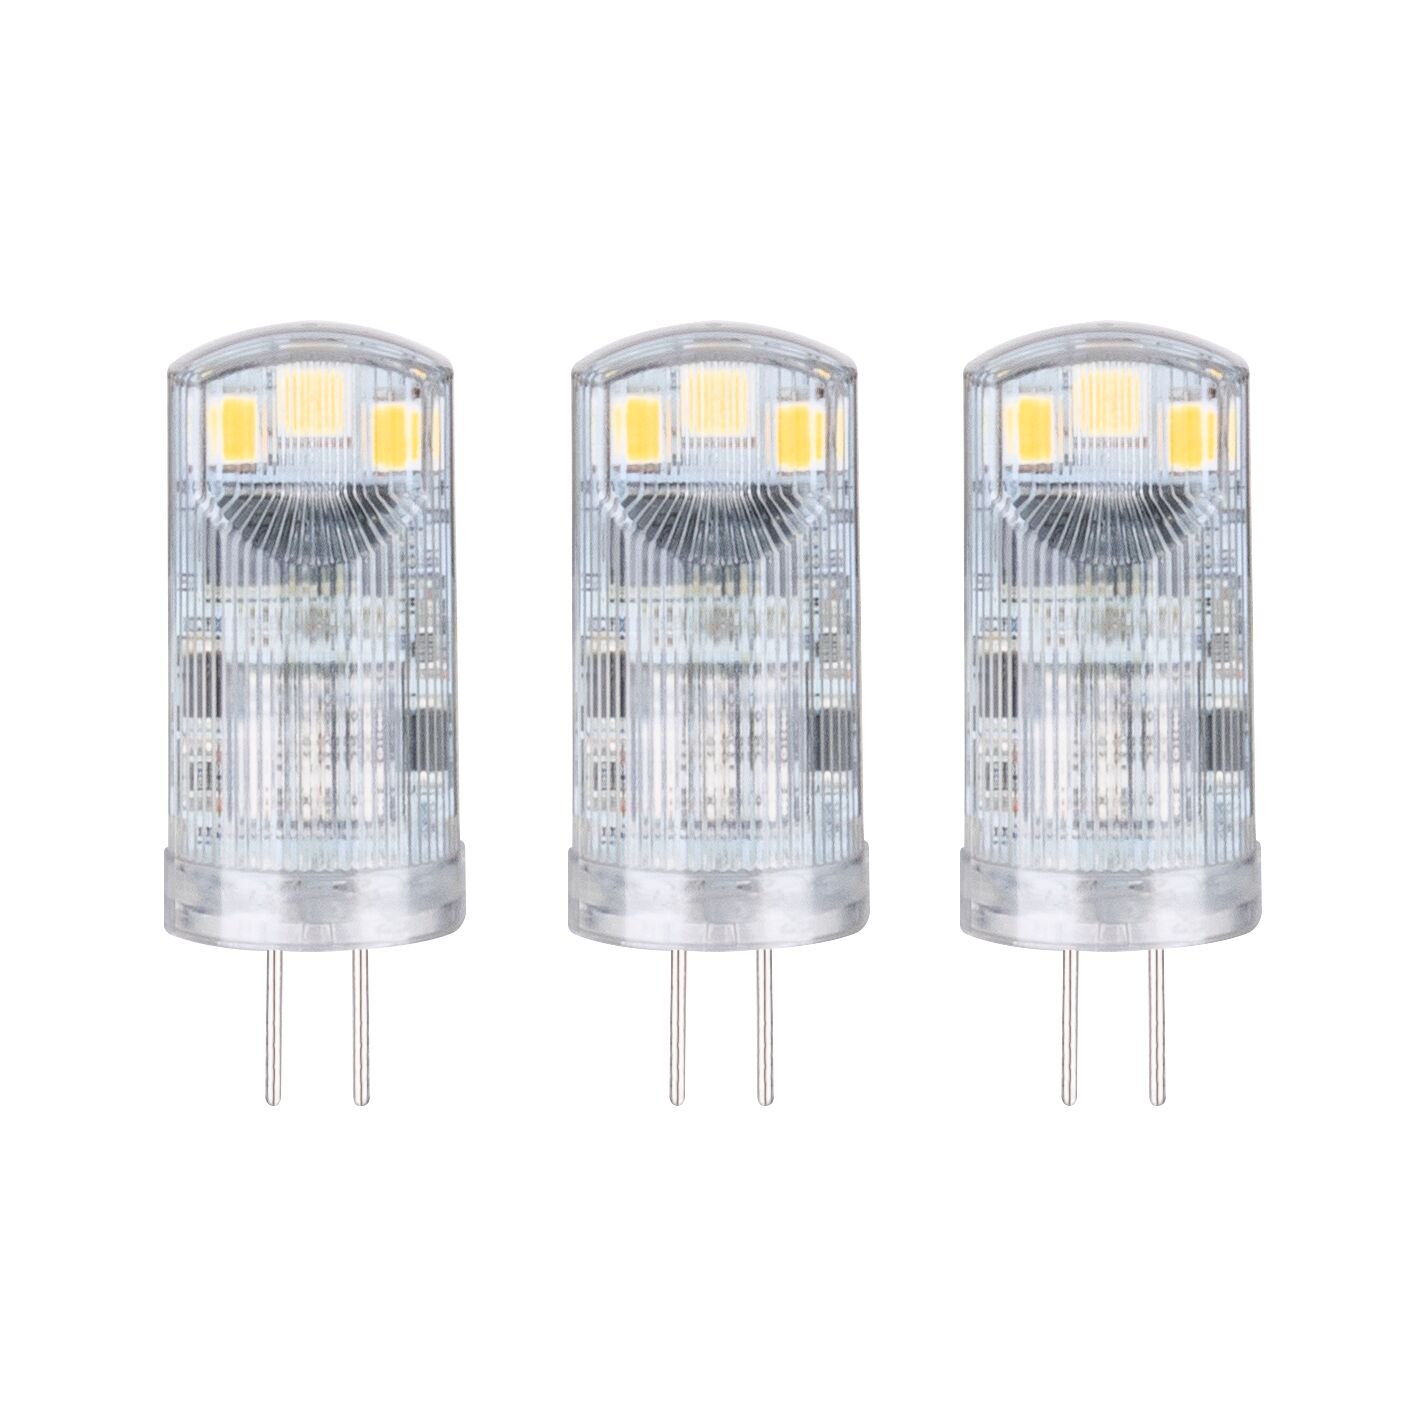 Standard 12V LED Stiftsockel G4 3er-Pack 3x200lm 3x1,8W 2700K Klar